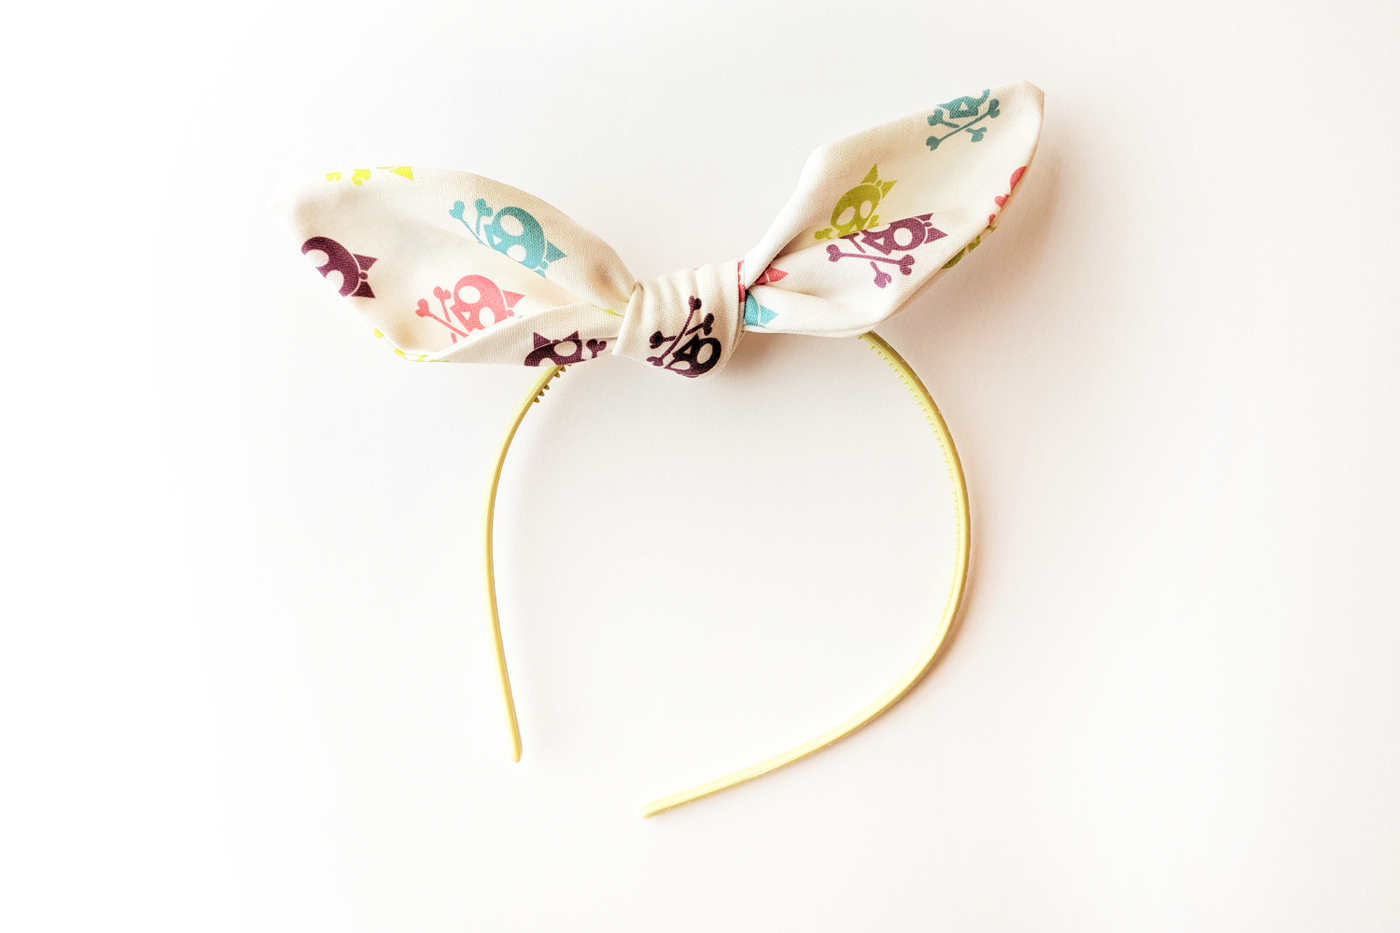 bunny bow headband ITH embroidery file